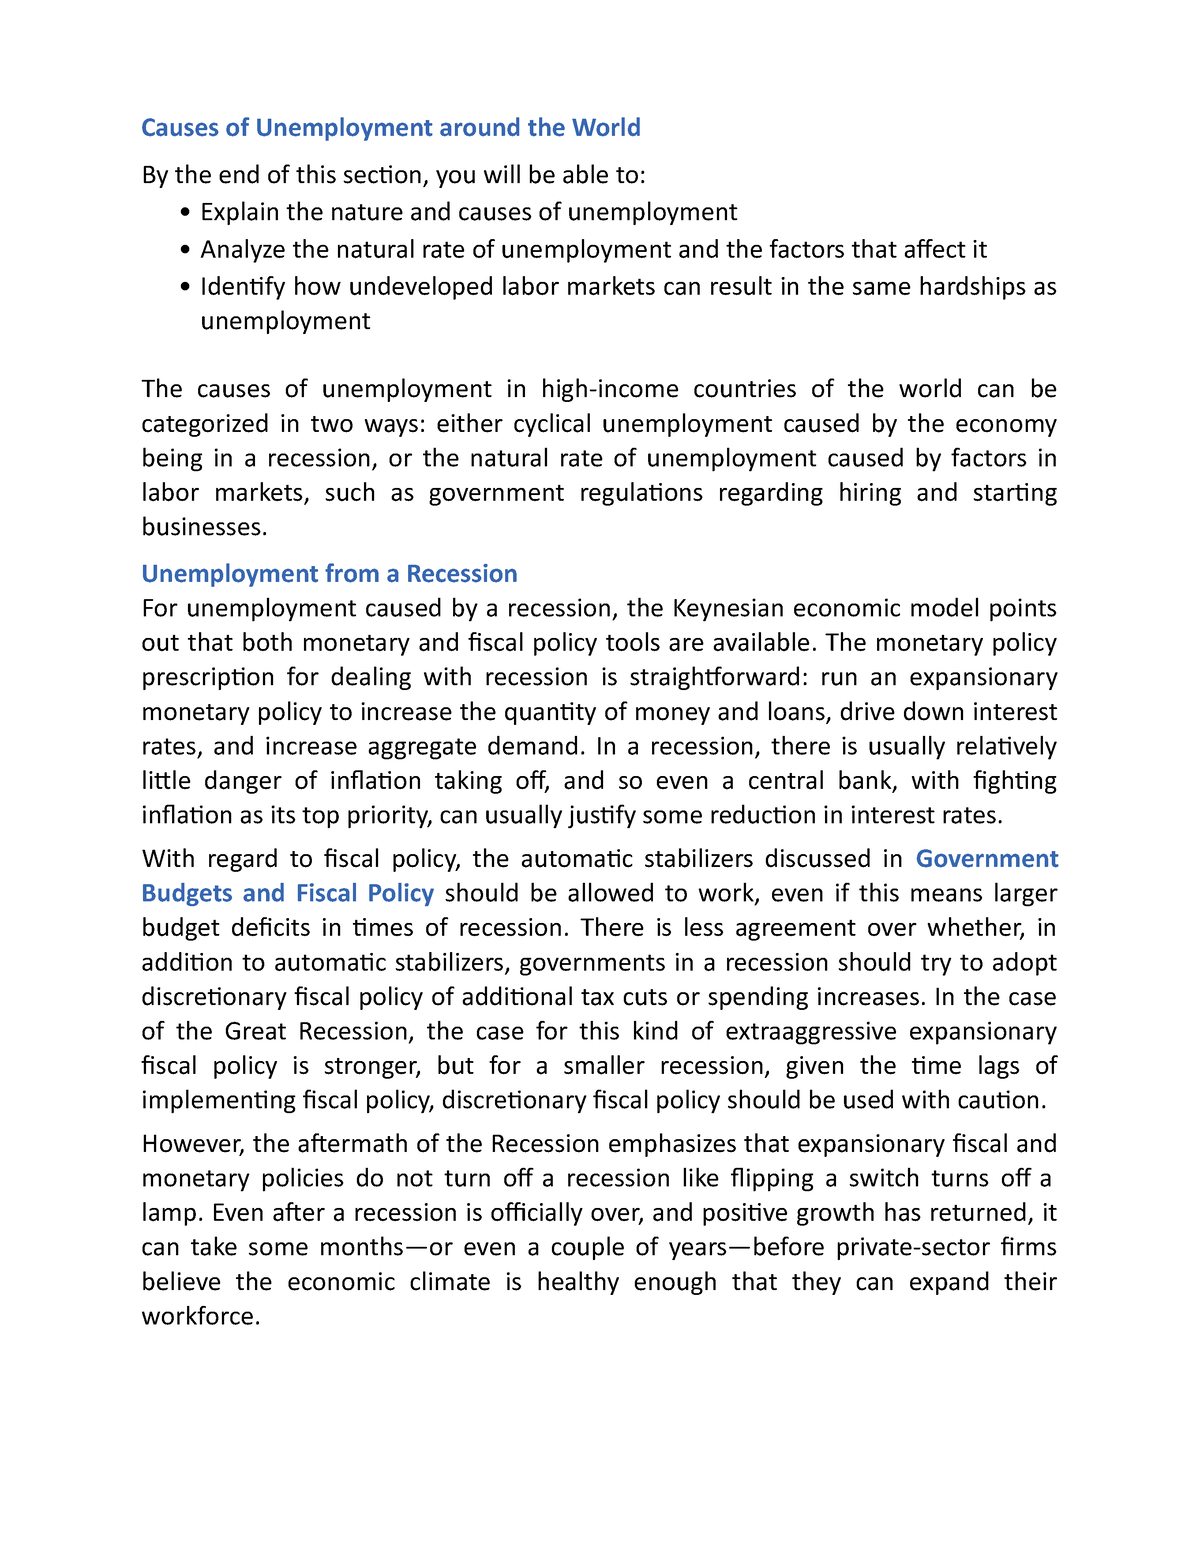 causes of unemployment around the world essay